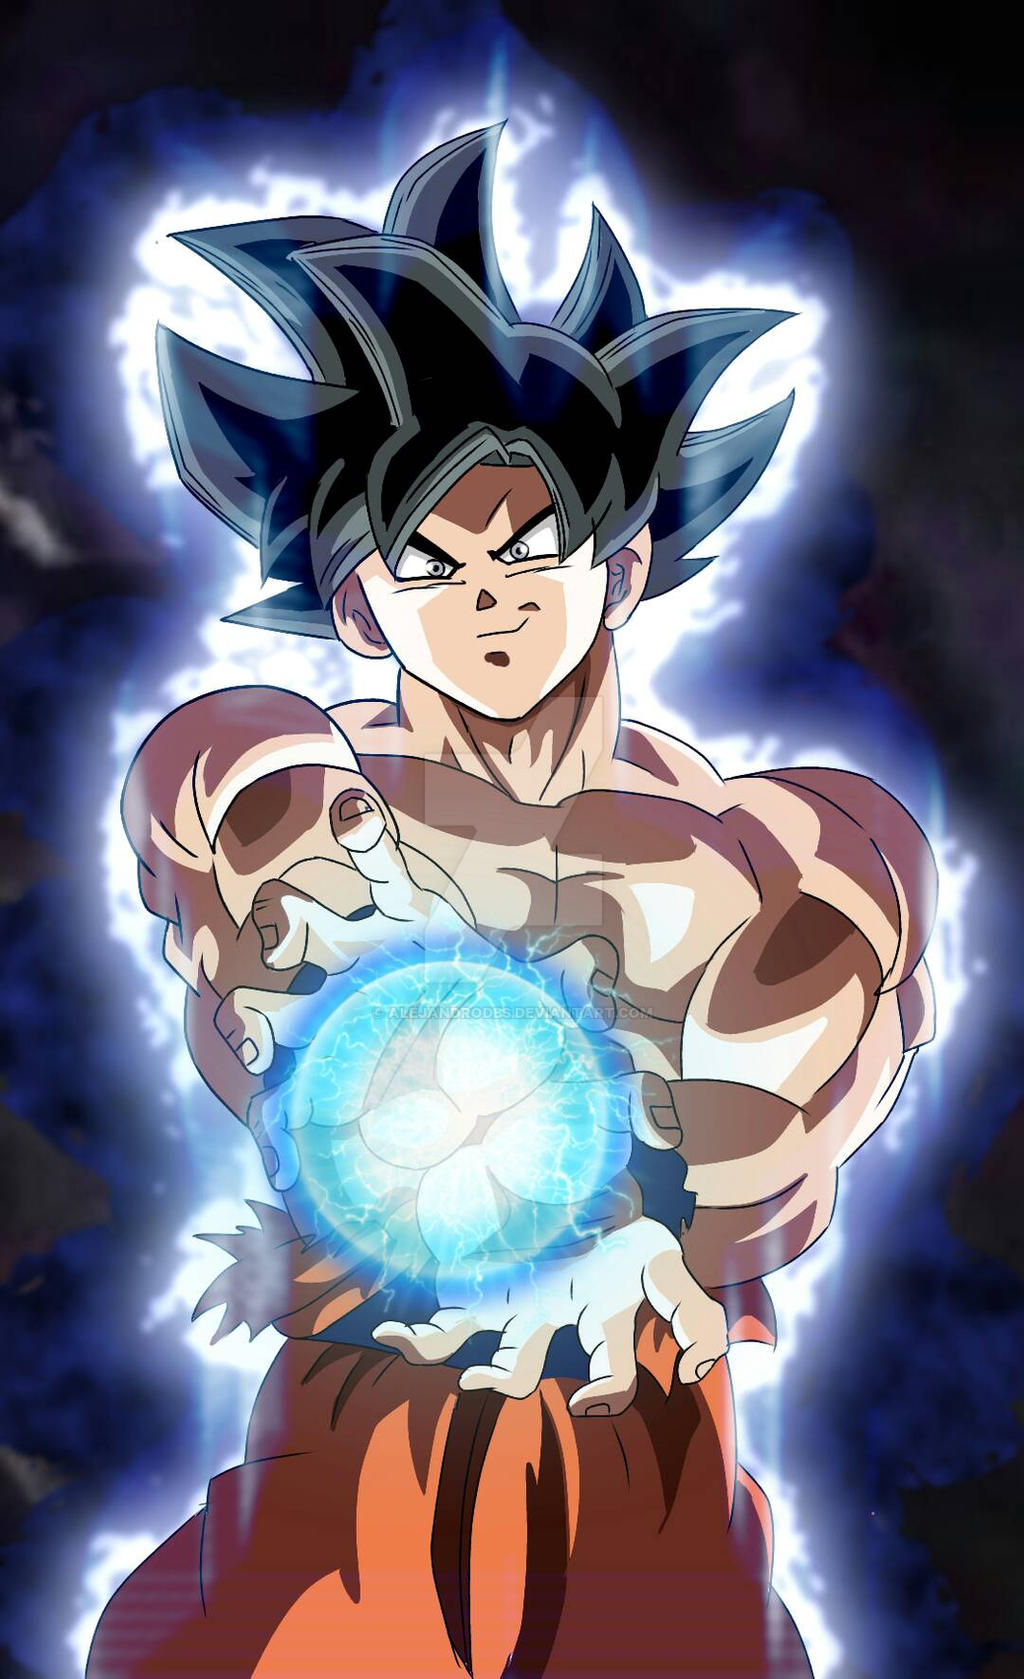 Goku Nueva Transformacion ultra instinto by AlejandroDBS on DeviantArt